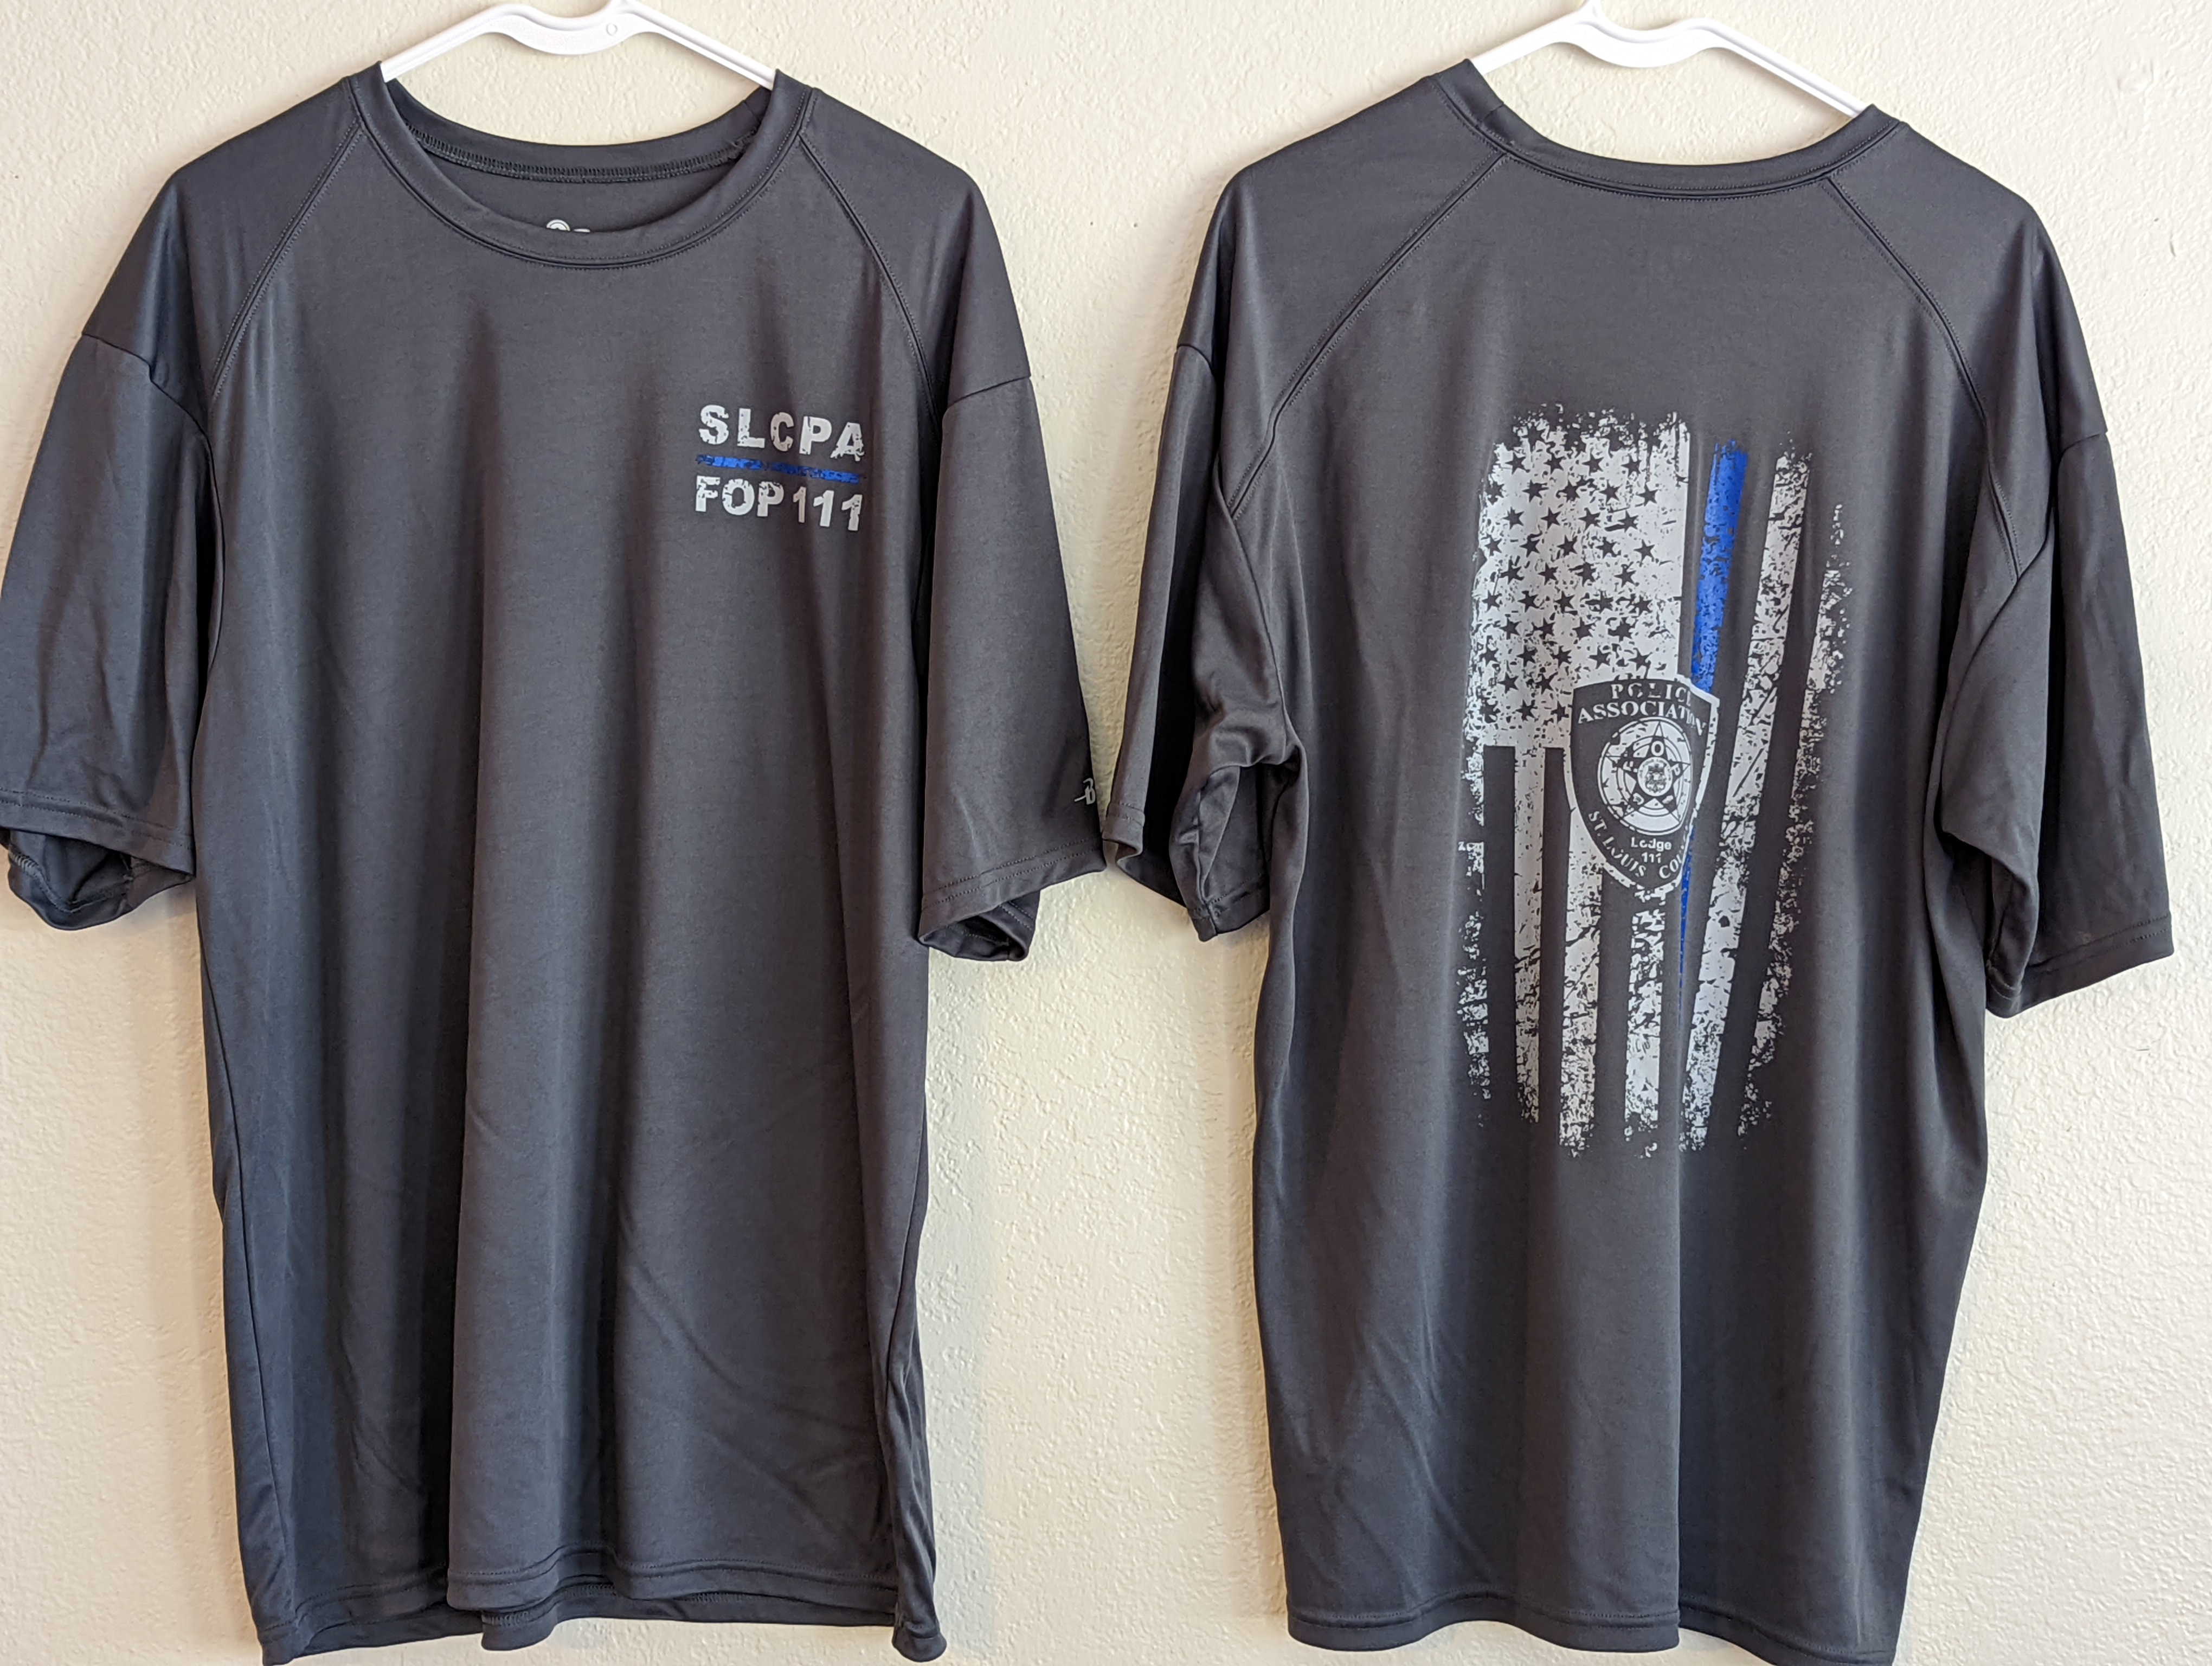 SLCPA FOP 111 Thin Blue line flag T-Shirt - graphite